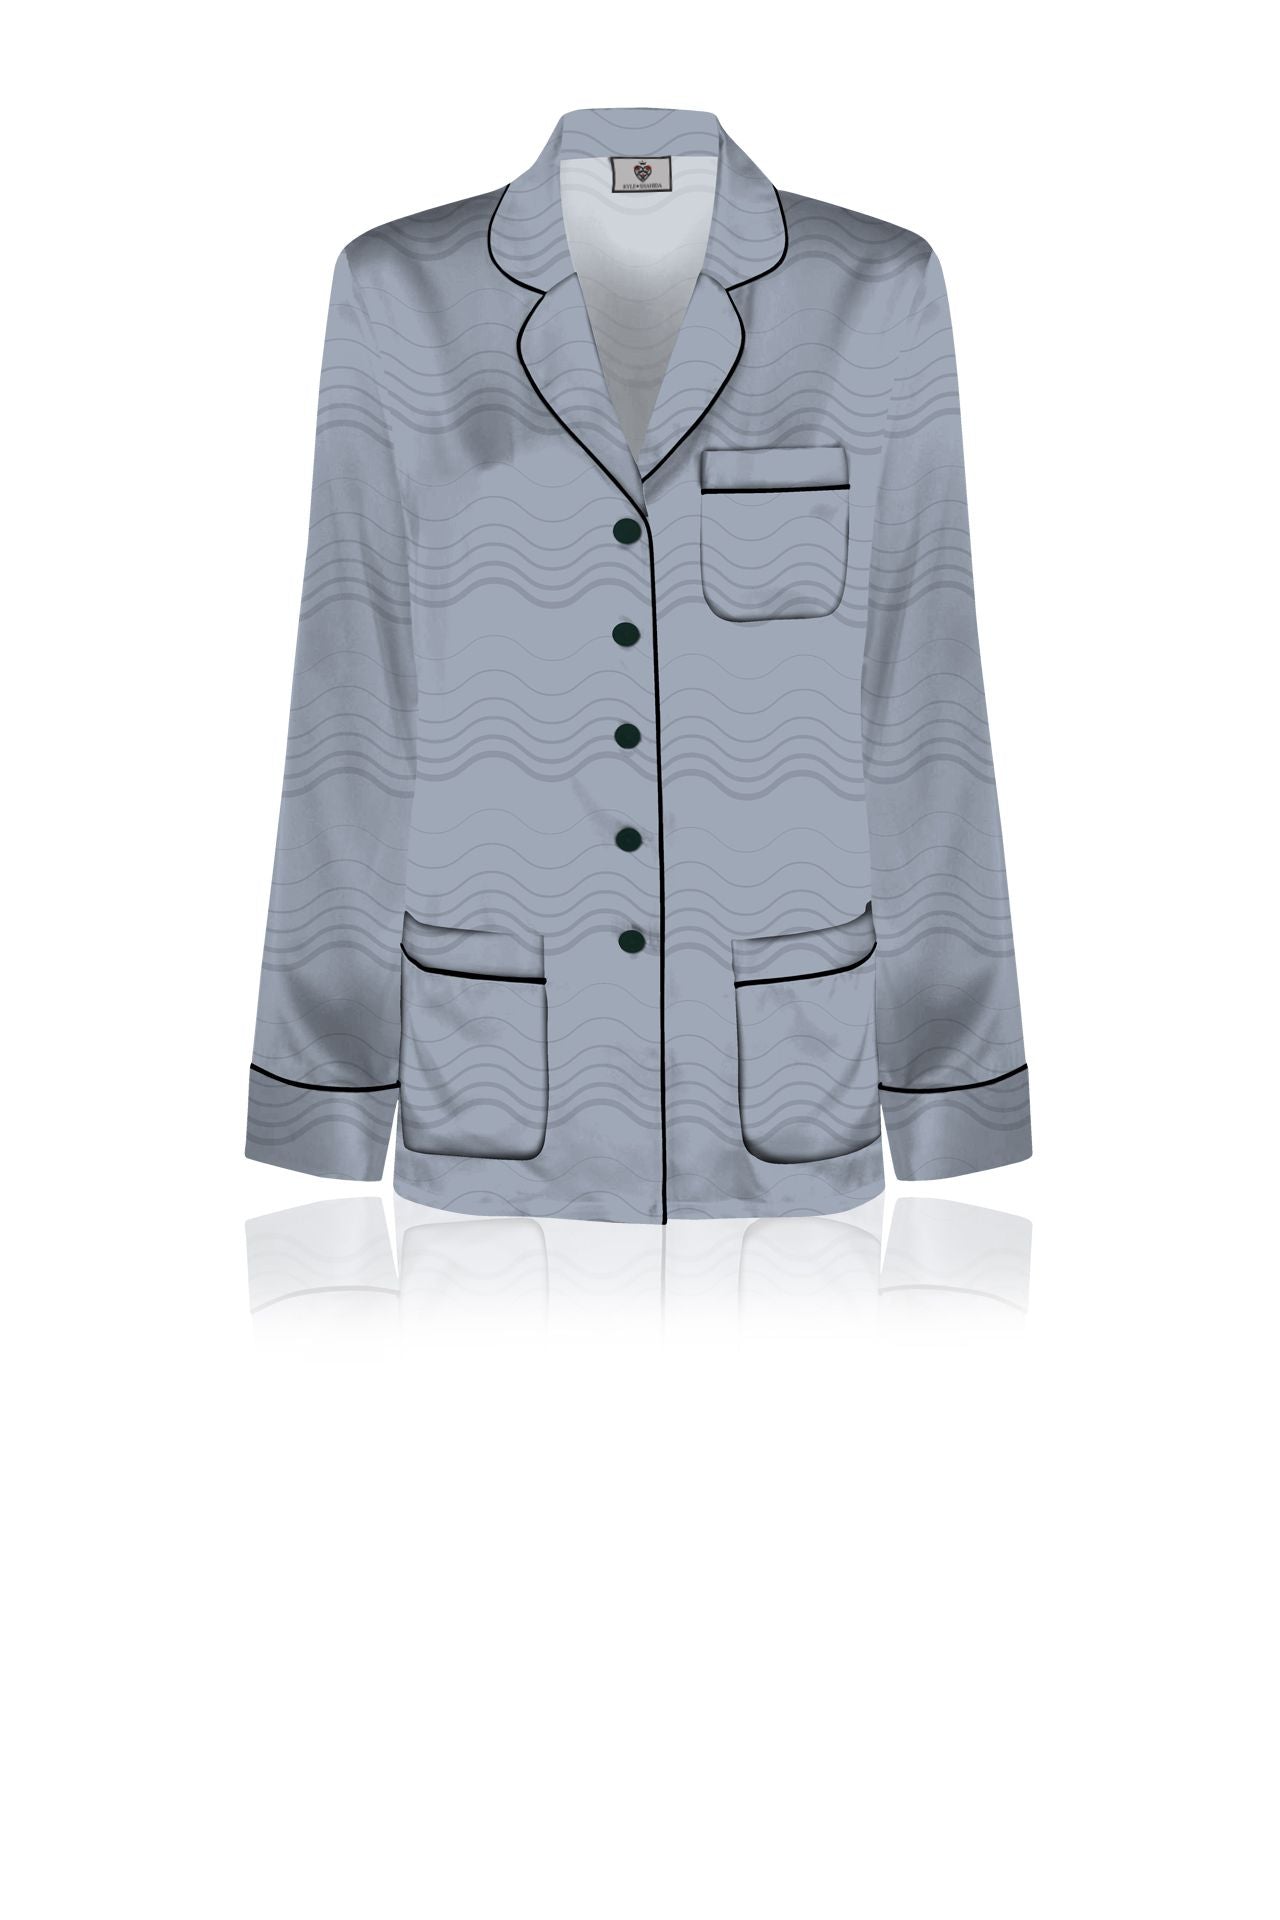 Grey Vegan Silk Full Sleeve Pajama Set Made In Sustainable Cupro